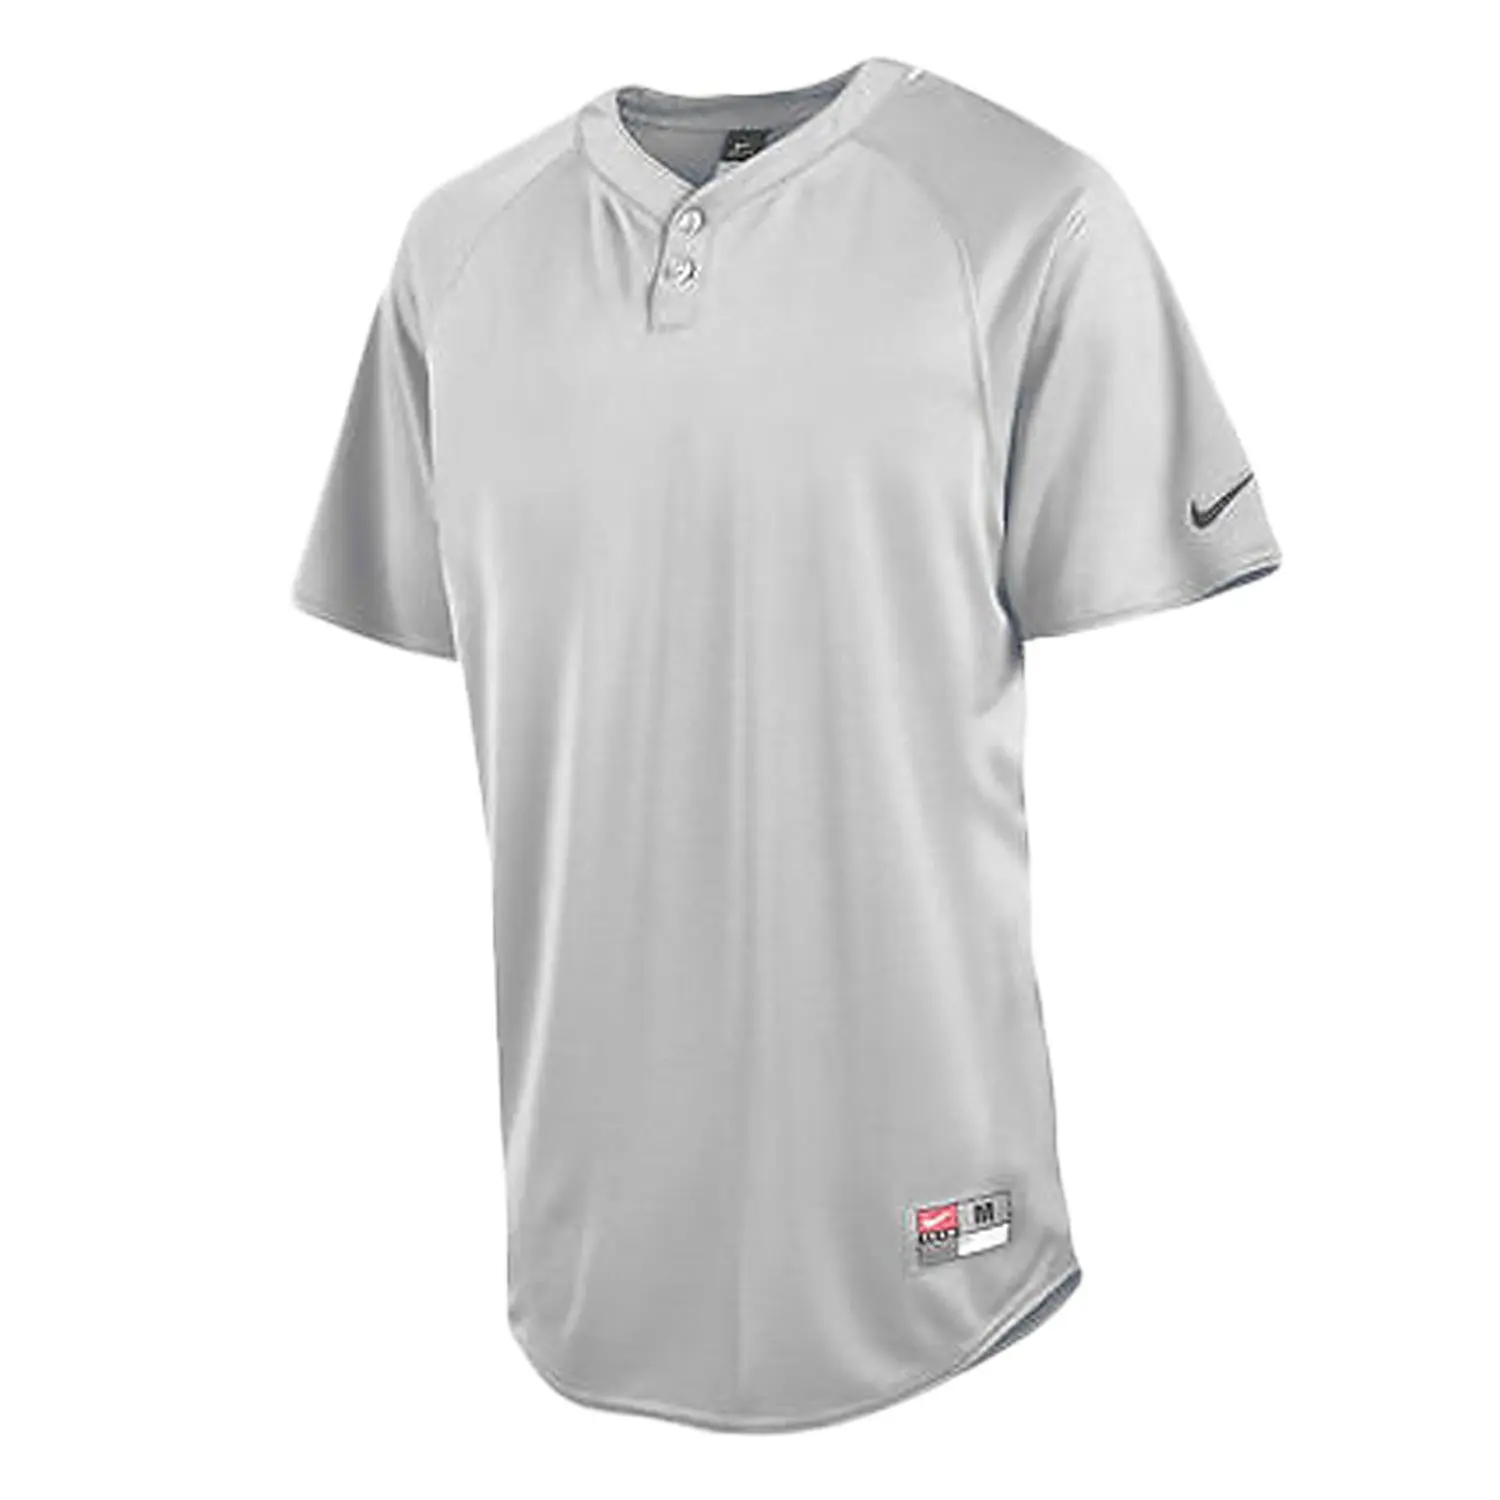 Game Jersey Shirt 453351 052 Grey 2XL 